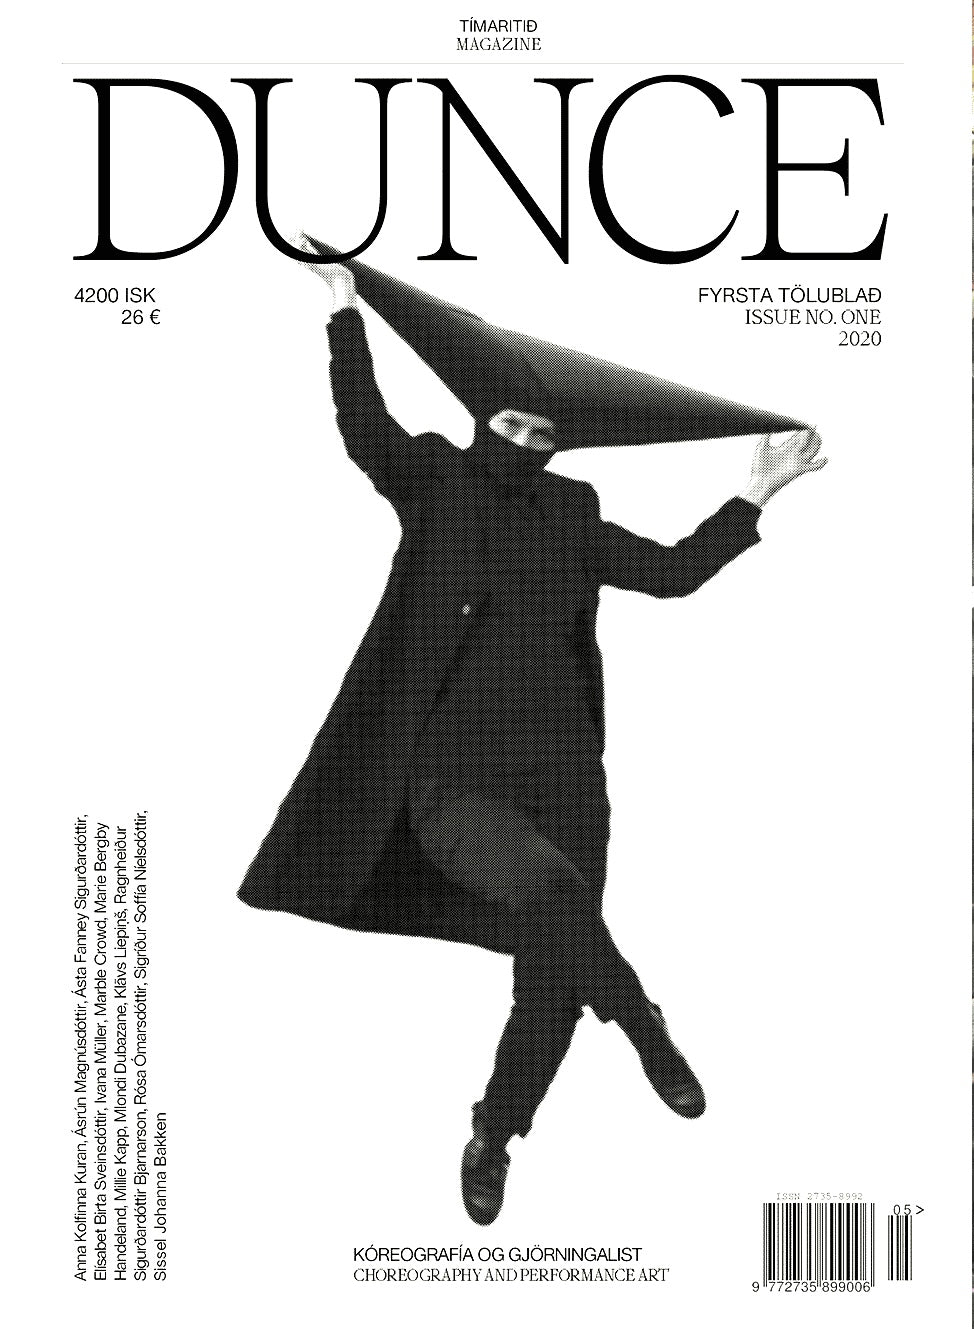 DUNE magazine No.5 - アート・デザイン・音楽